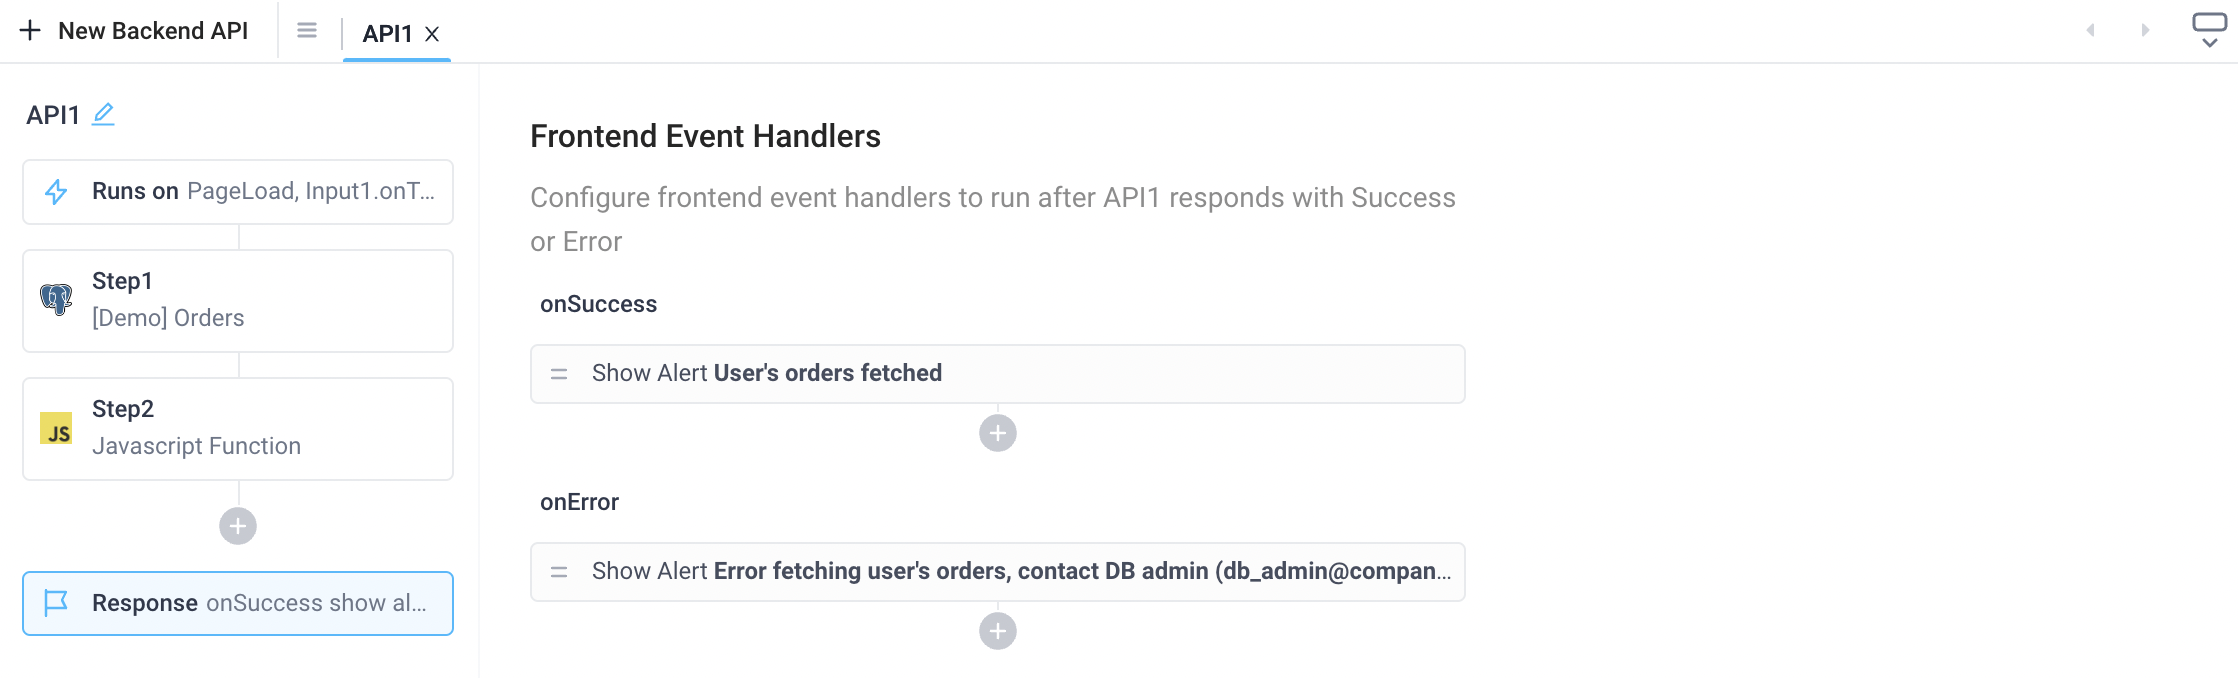 Define custom error notifications for APIs within the API builder